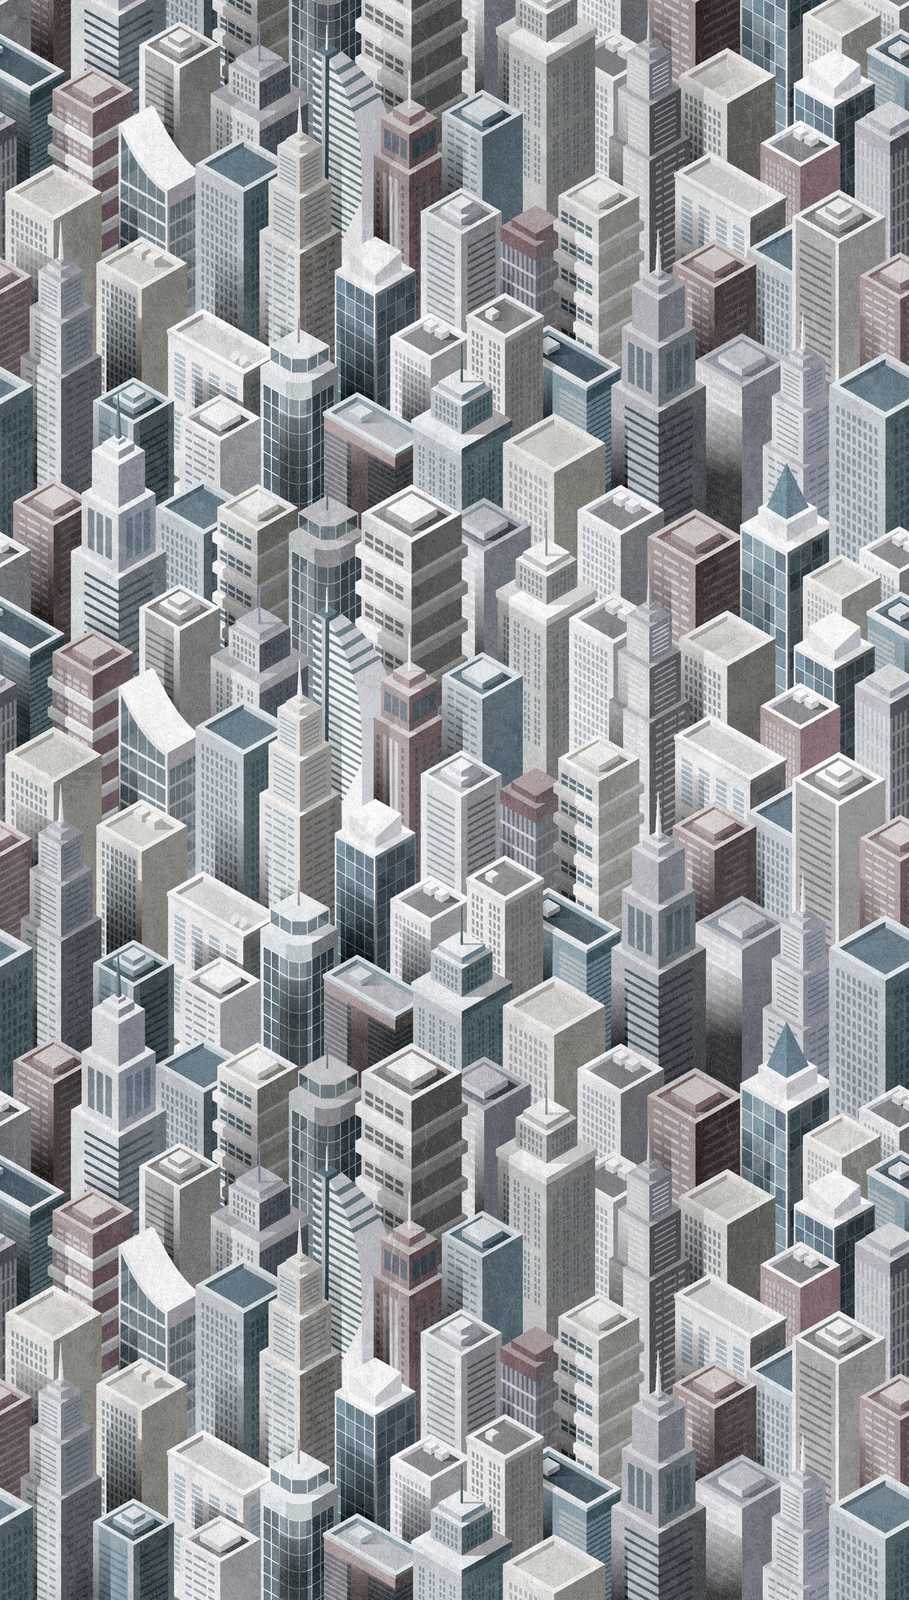             Wallpaper novelty - motif wallpaper Skyscraper 3D pattern Urban
        